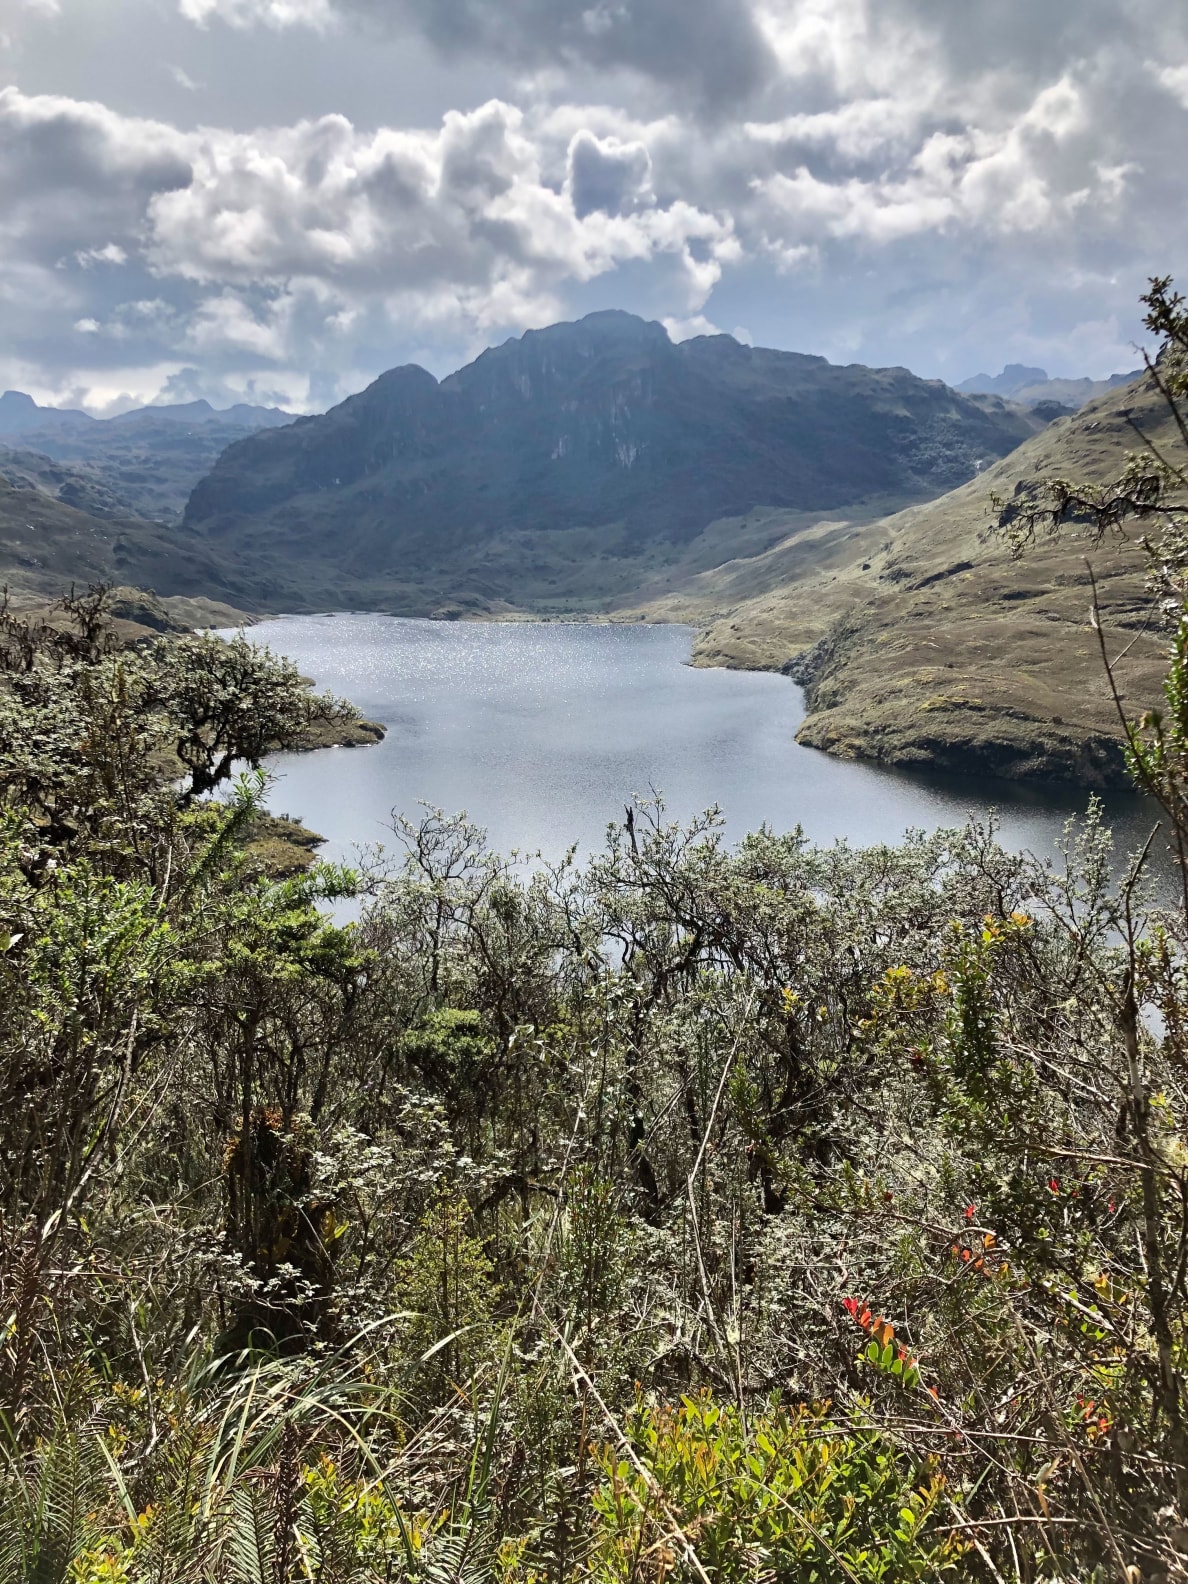 A photograph of a the Llaviucu Lake along the Inca trail.